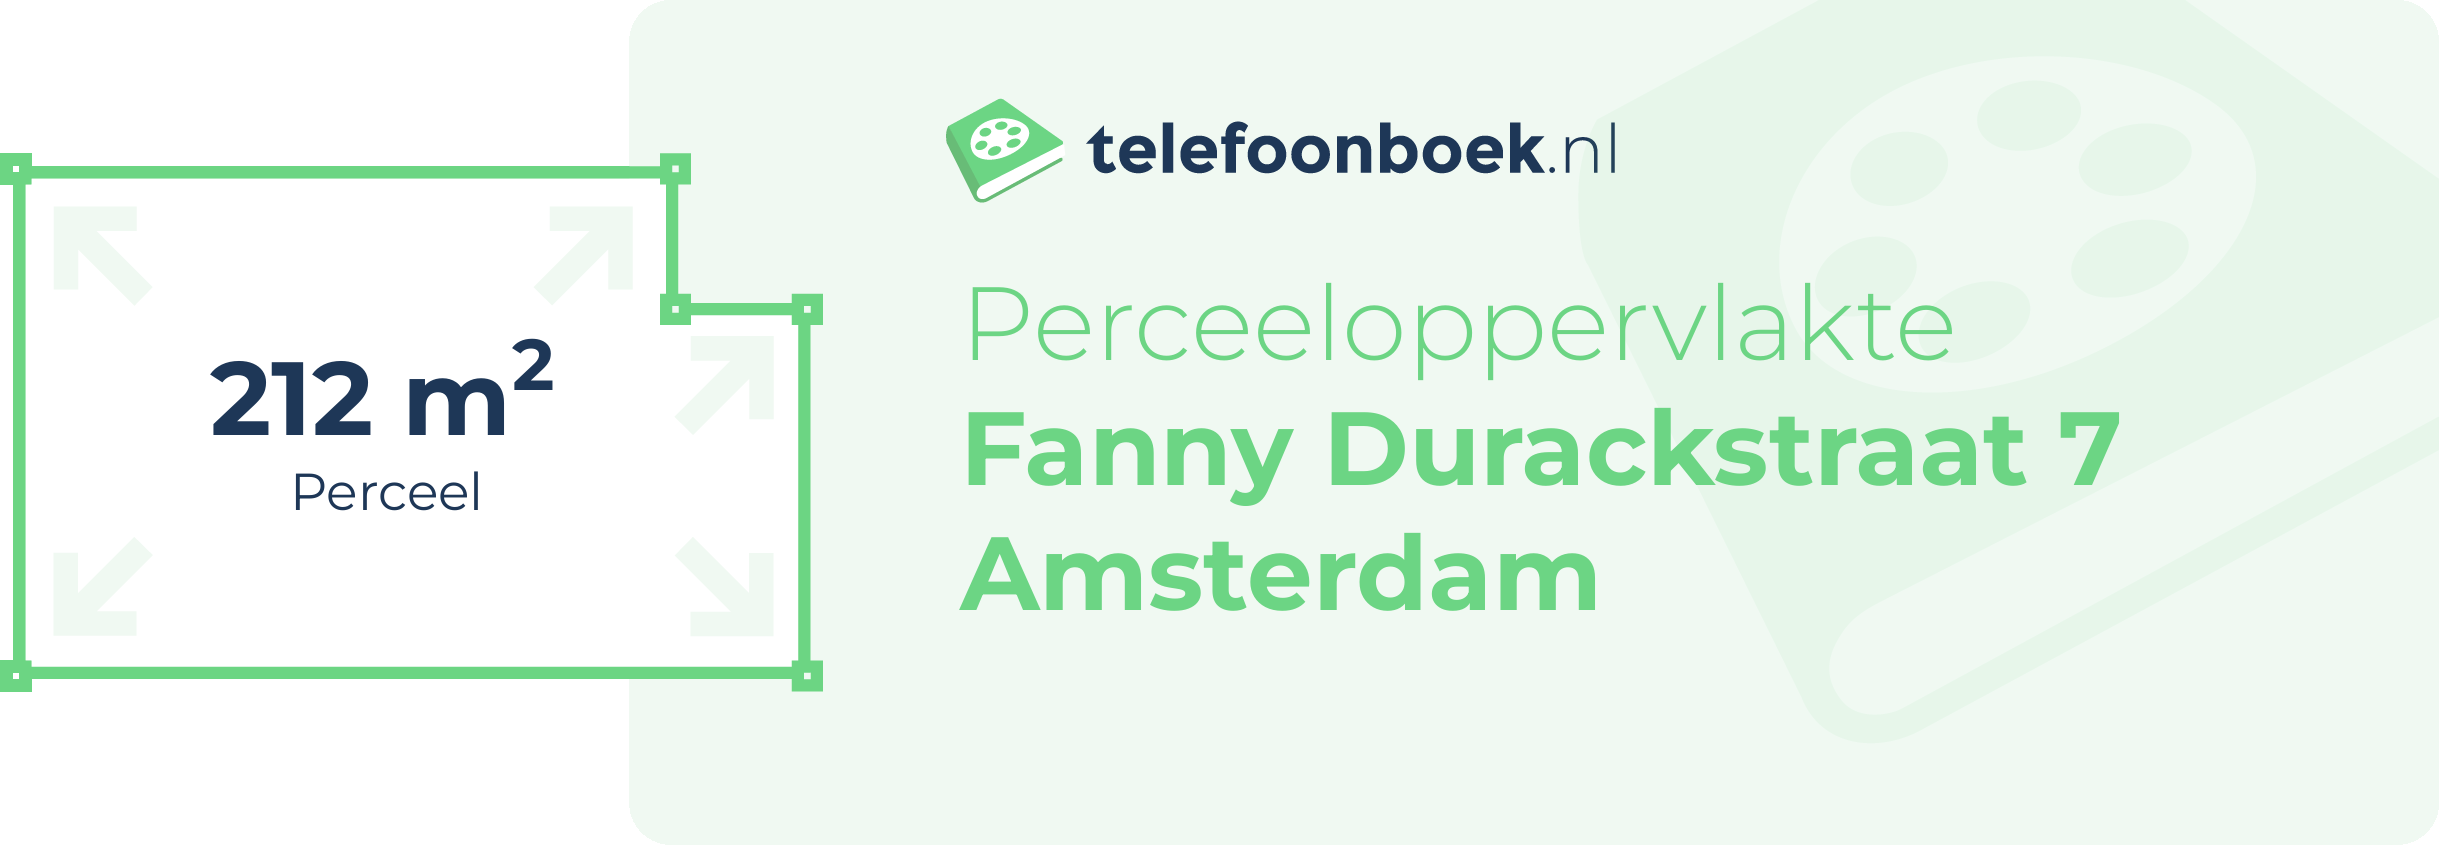 Perceeloppervlakte Fanny Durackstraat 7 Amsterdam